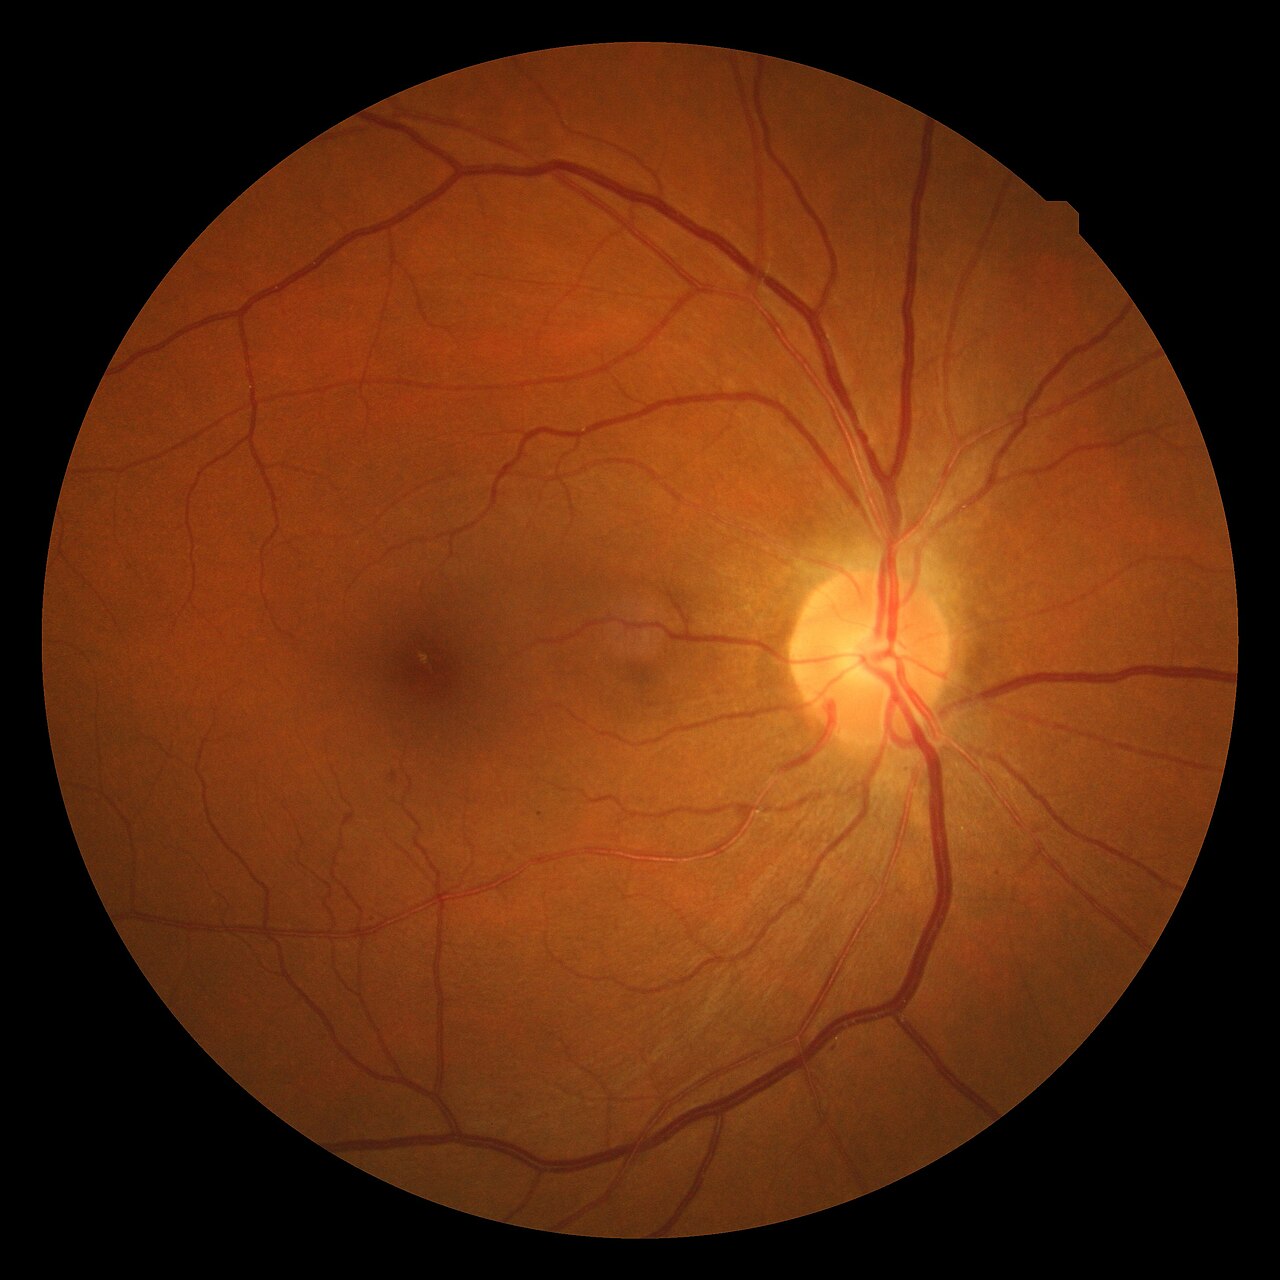 hipertansiyonlu retinopati